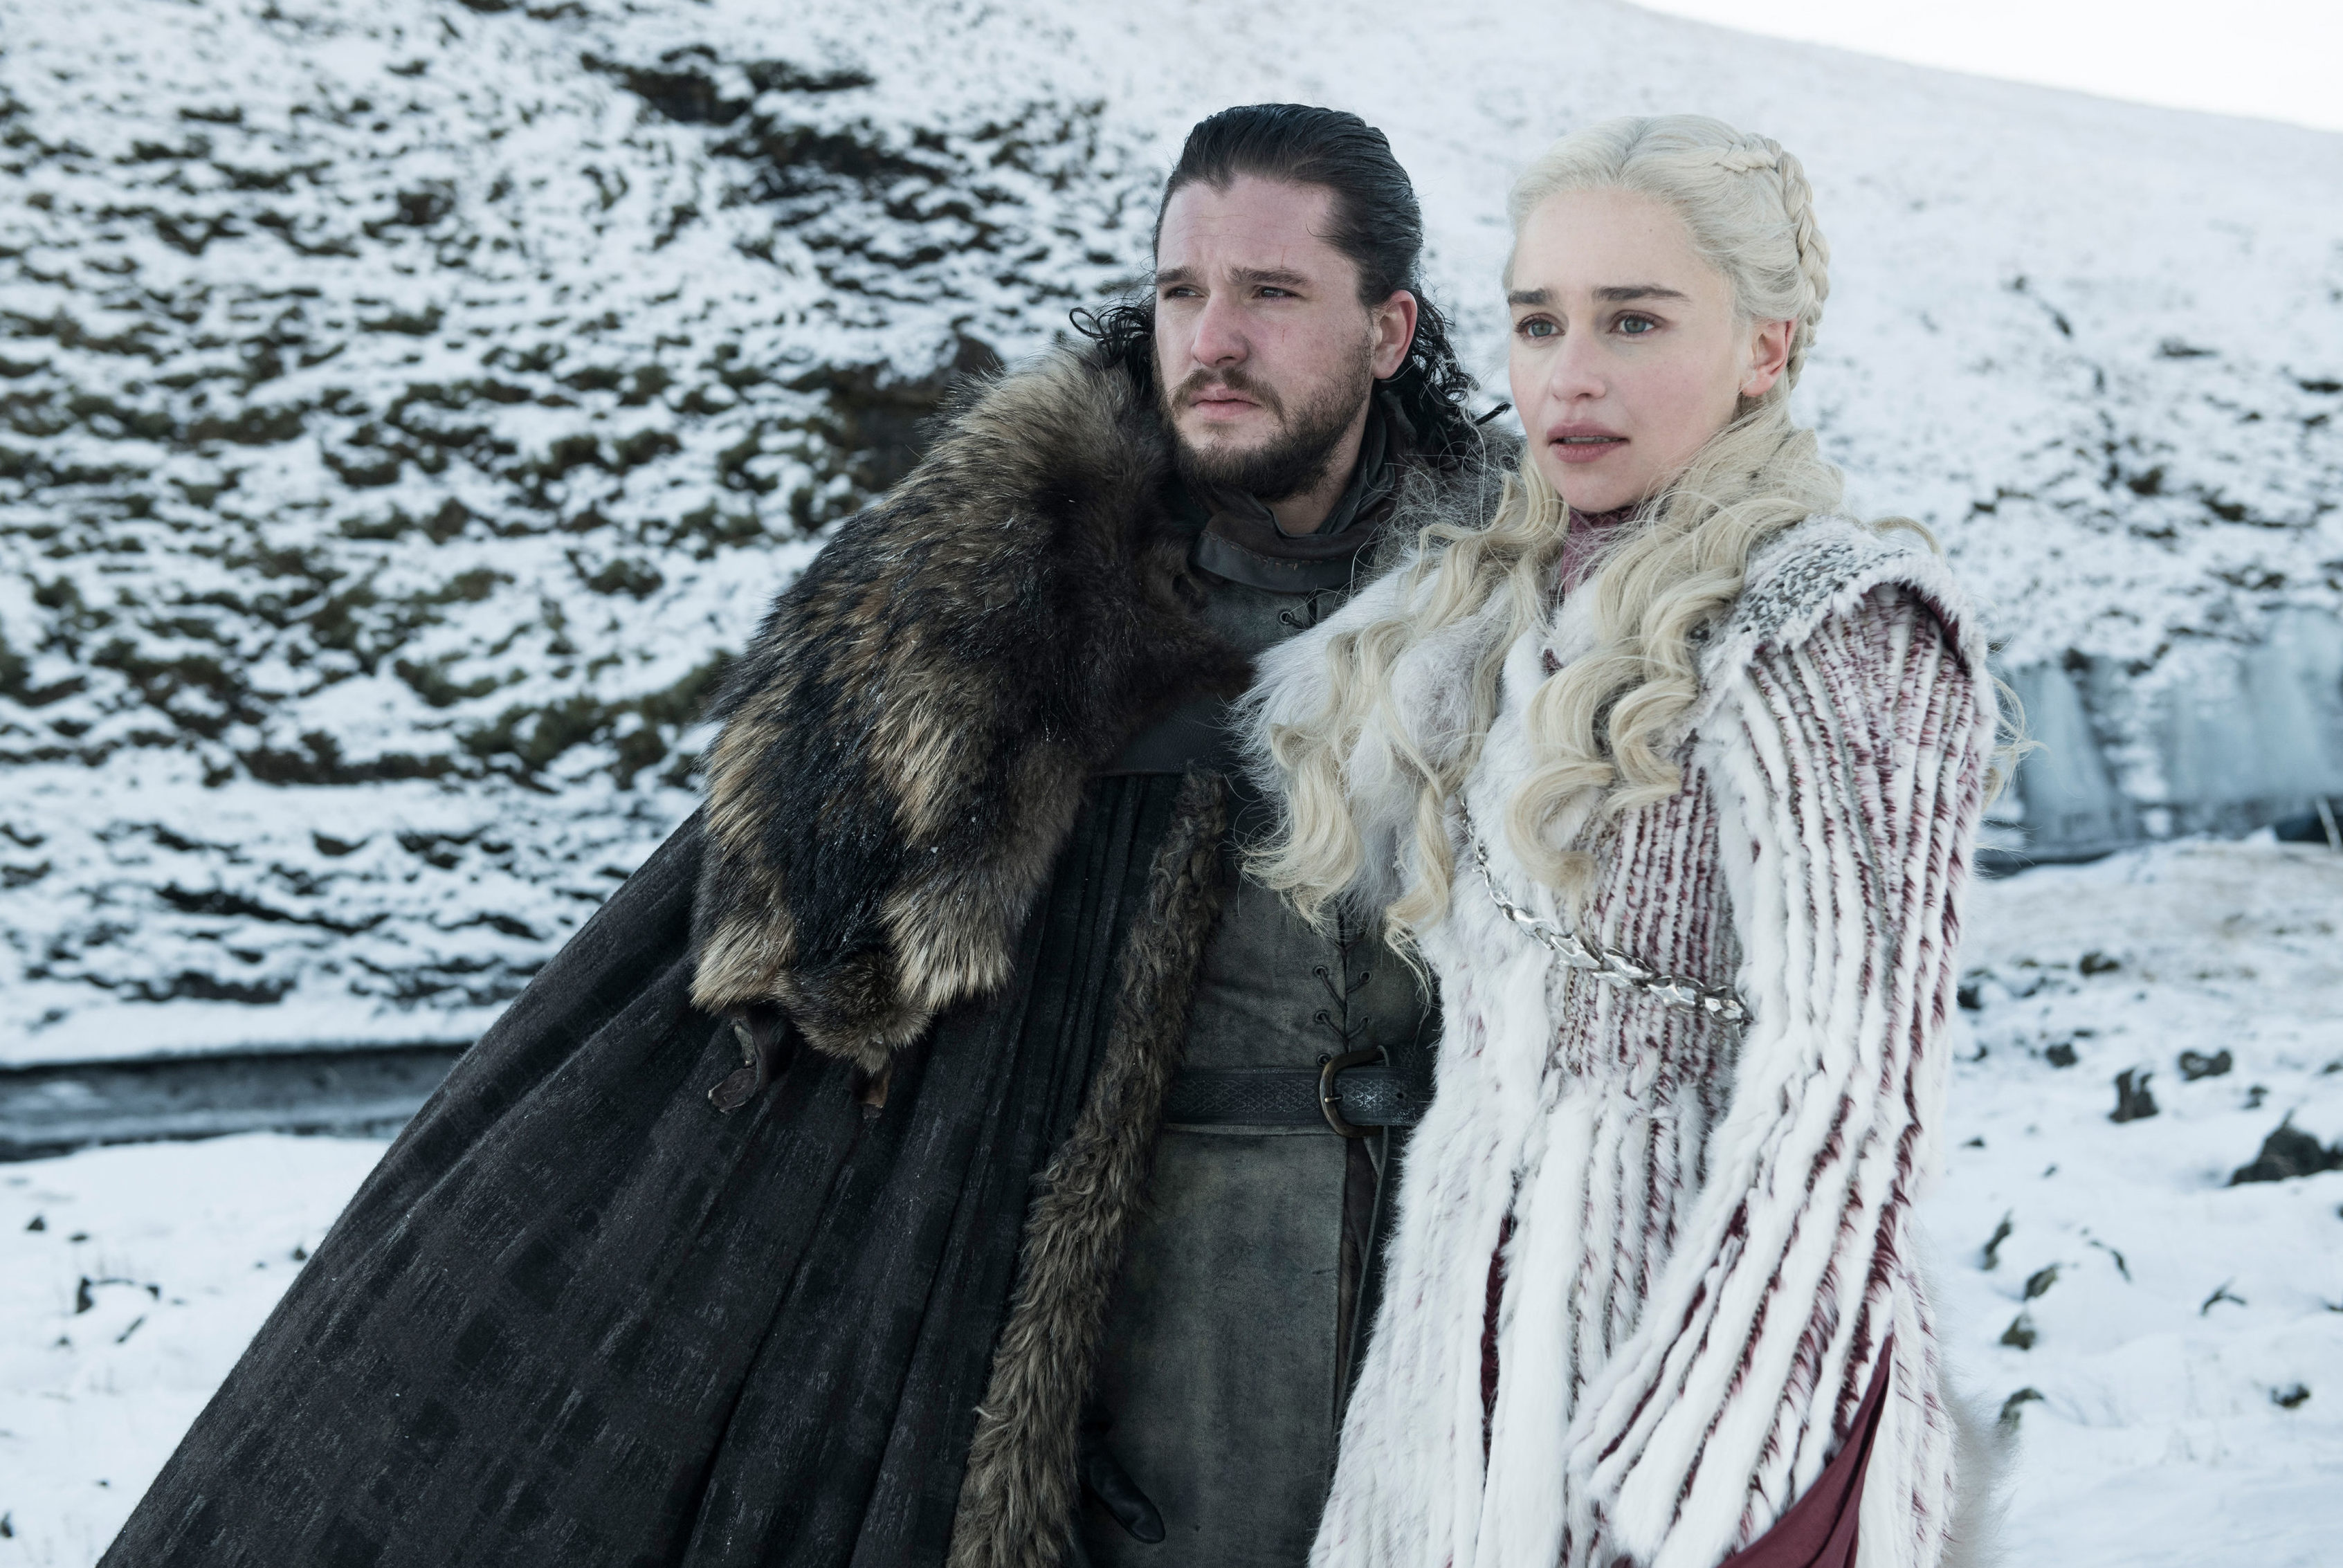 Kit Harington as Jon Snow, left, and Emilia Clarke as Daenerys Targaryen in a scene from "Game of Thrones".